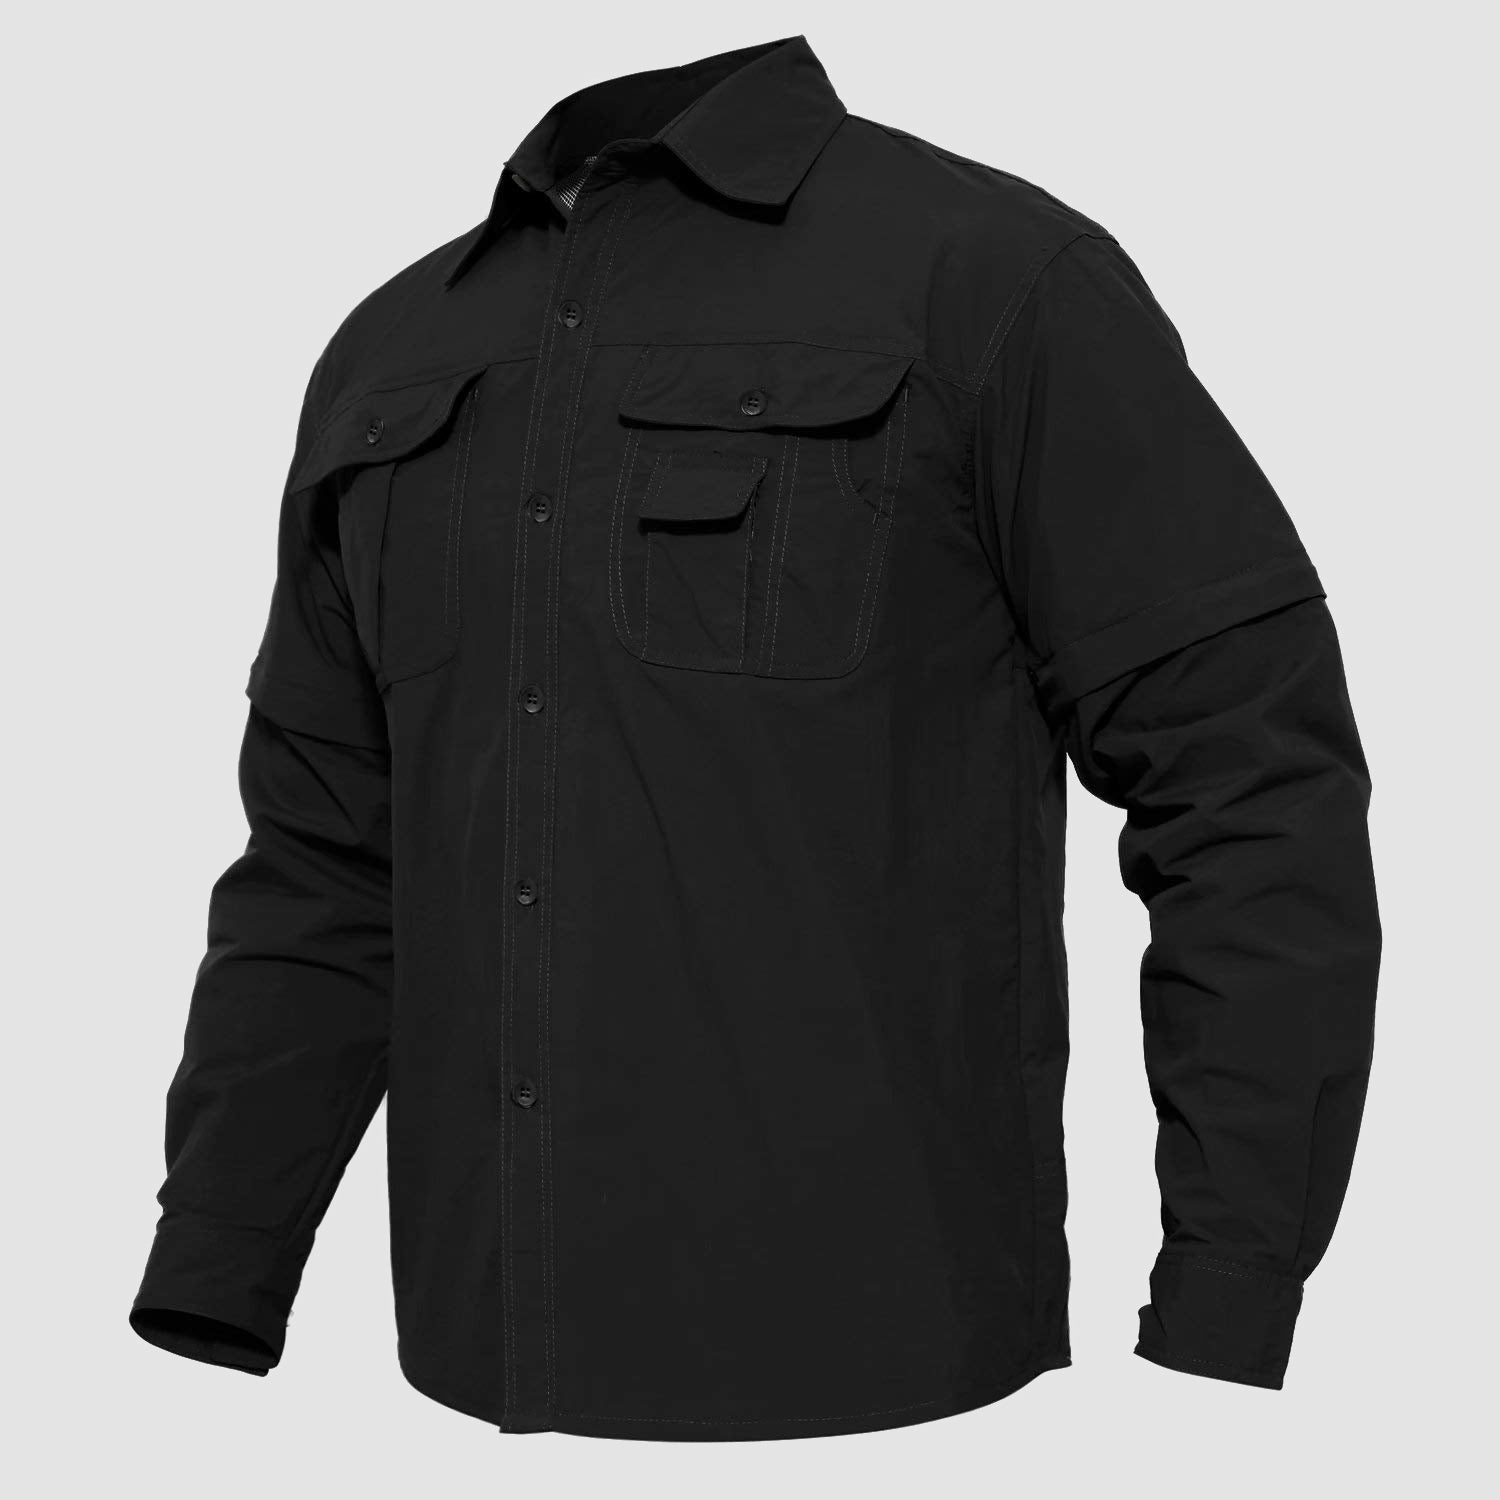 Mens Fishing Hiking Shirts with Detachable Sleeves Long/Short Sleeve Quick Dry, Black / 2XL